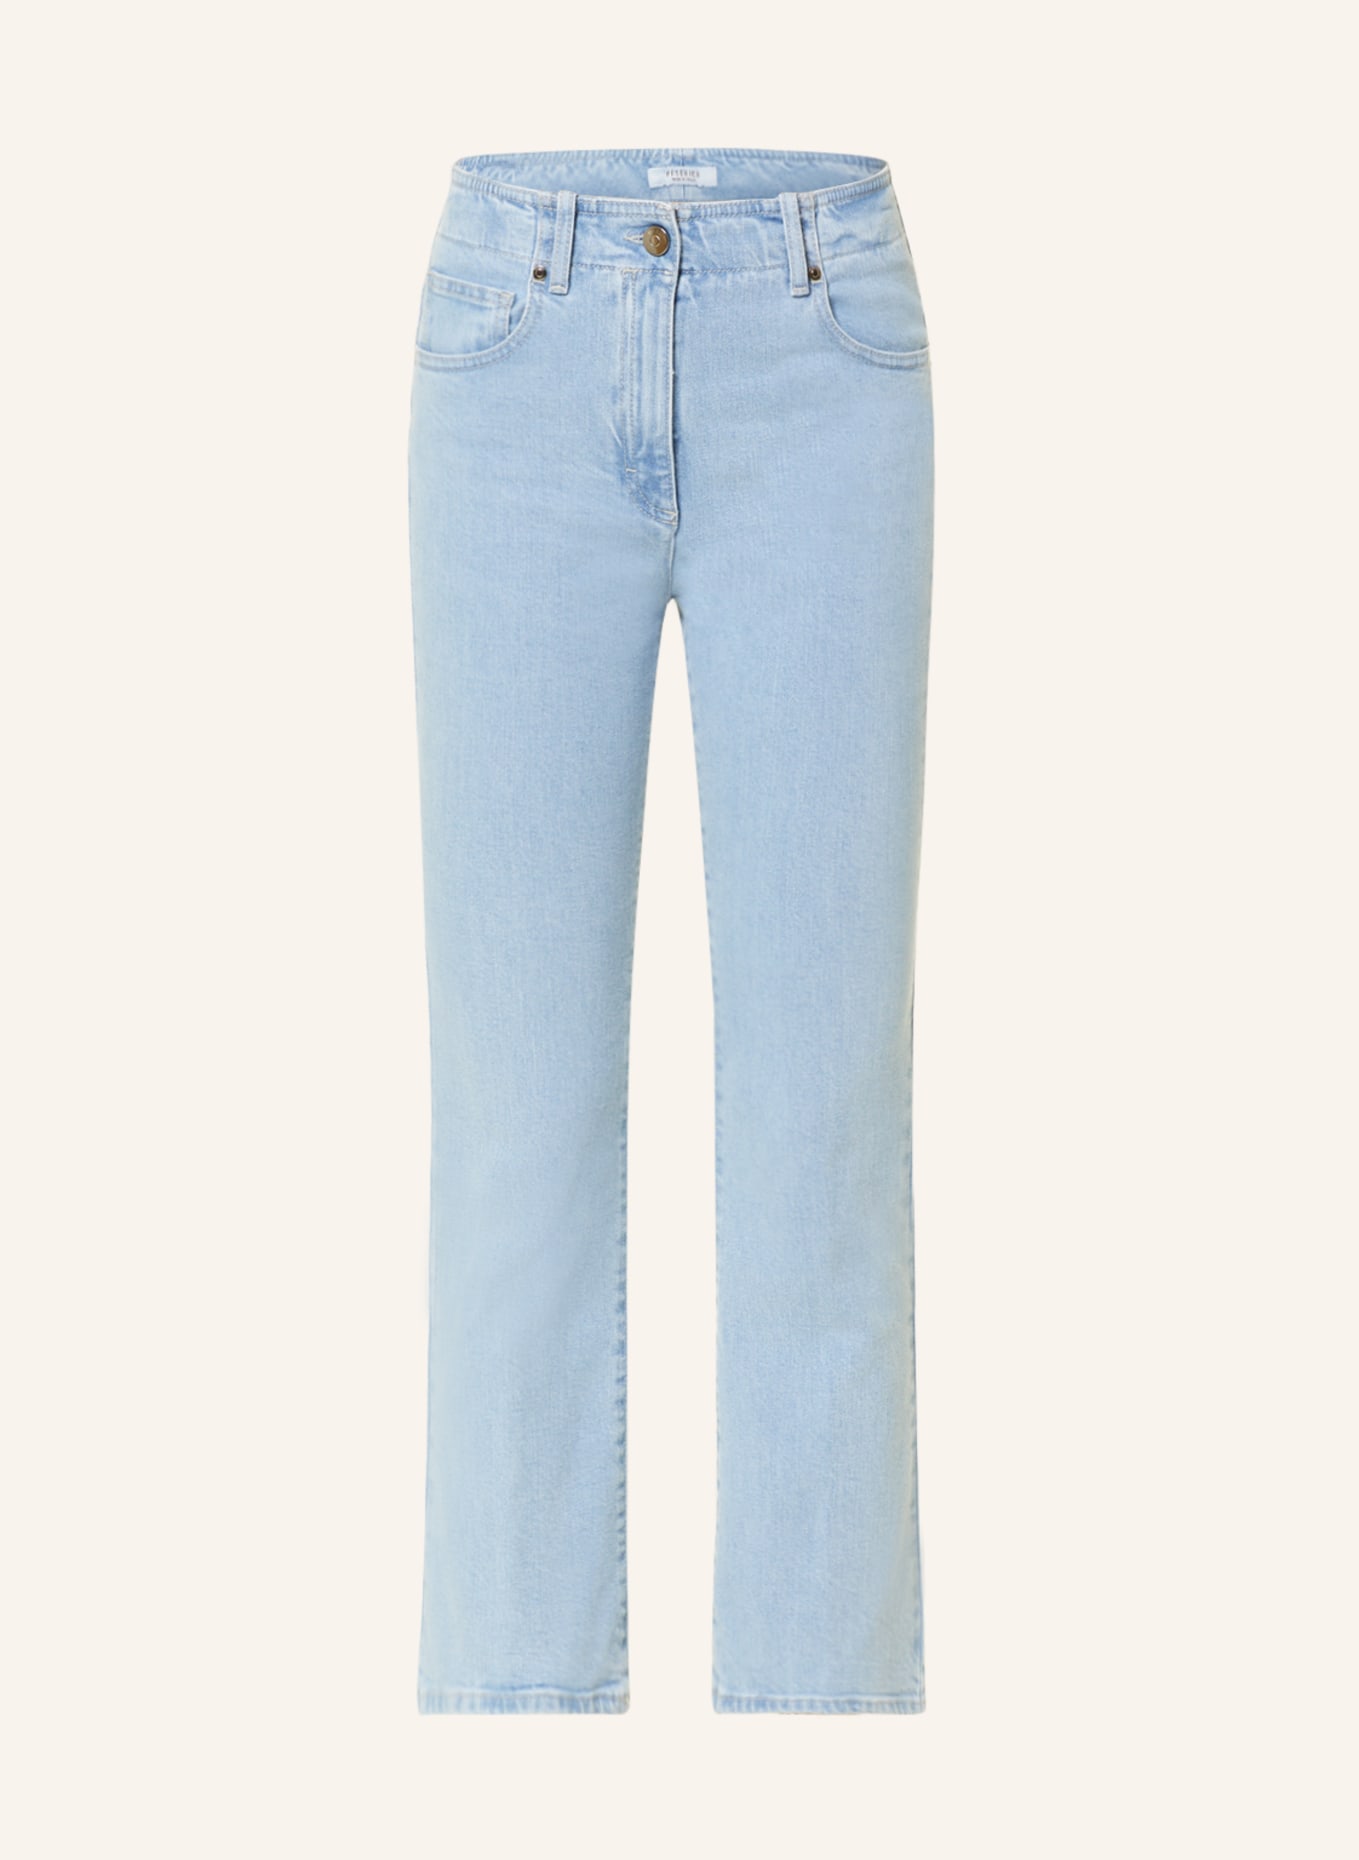 PESERICO 7/8-Jeans, Farbe: 961 light blue (Bild 1)